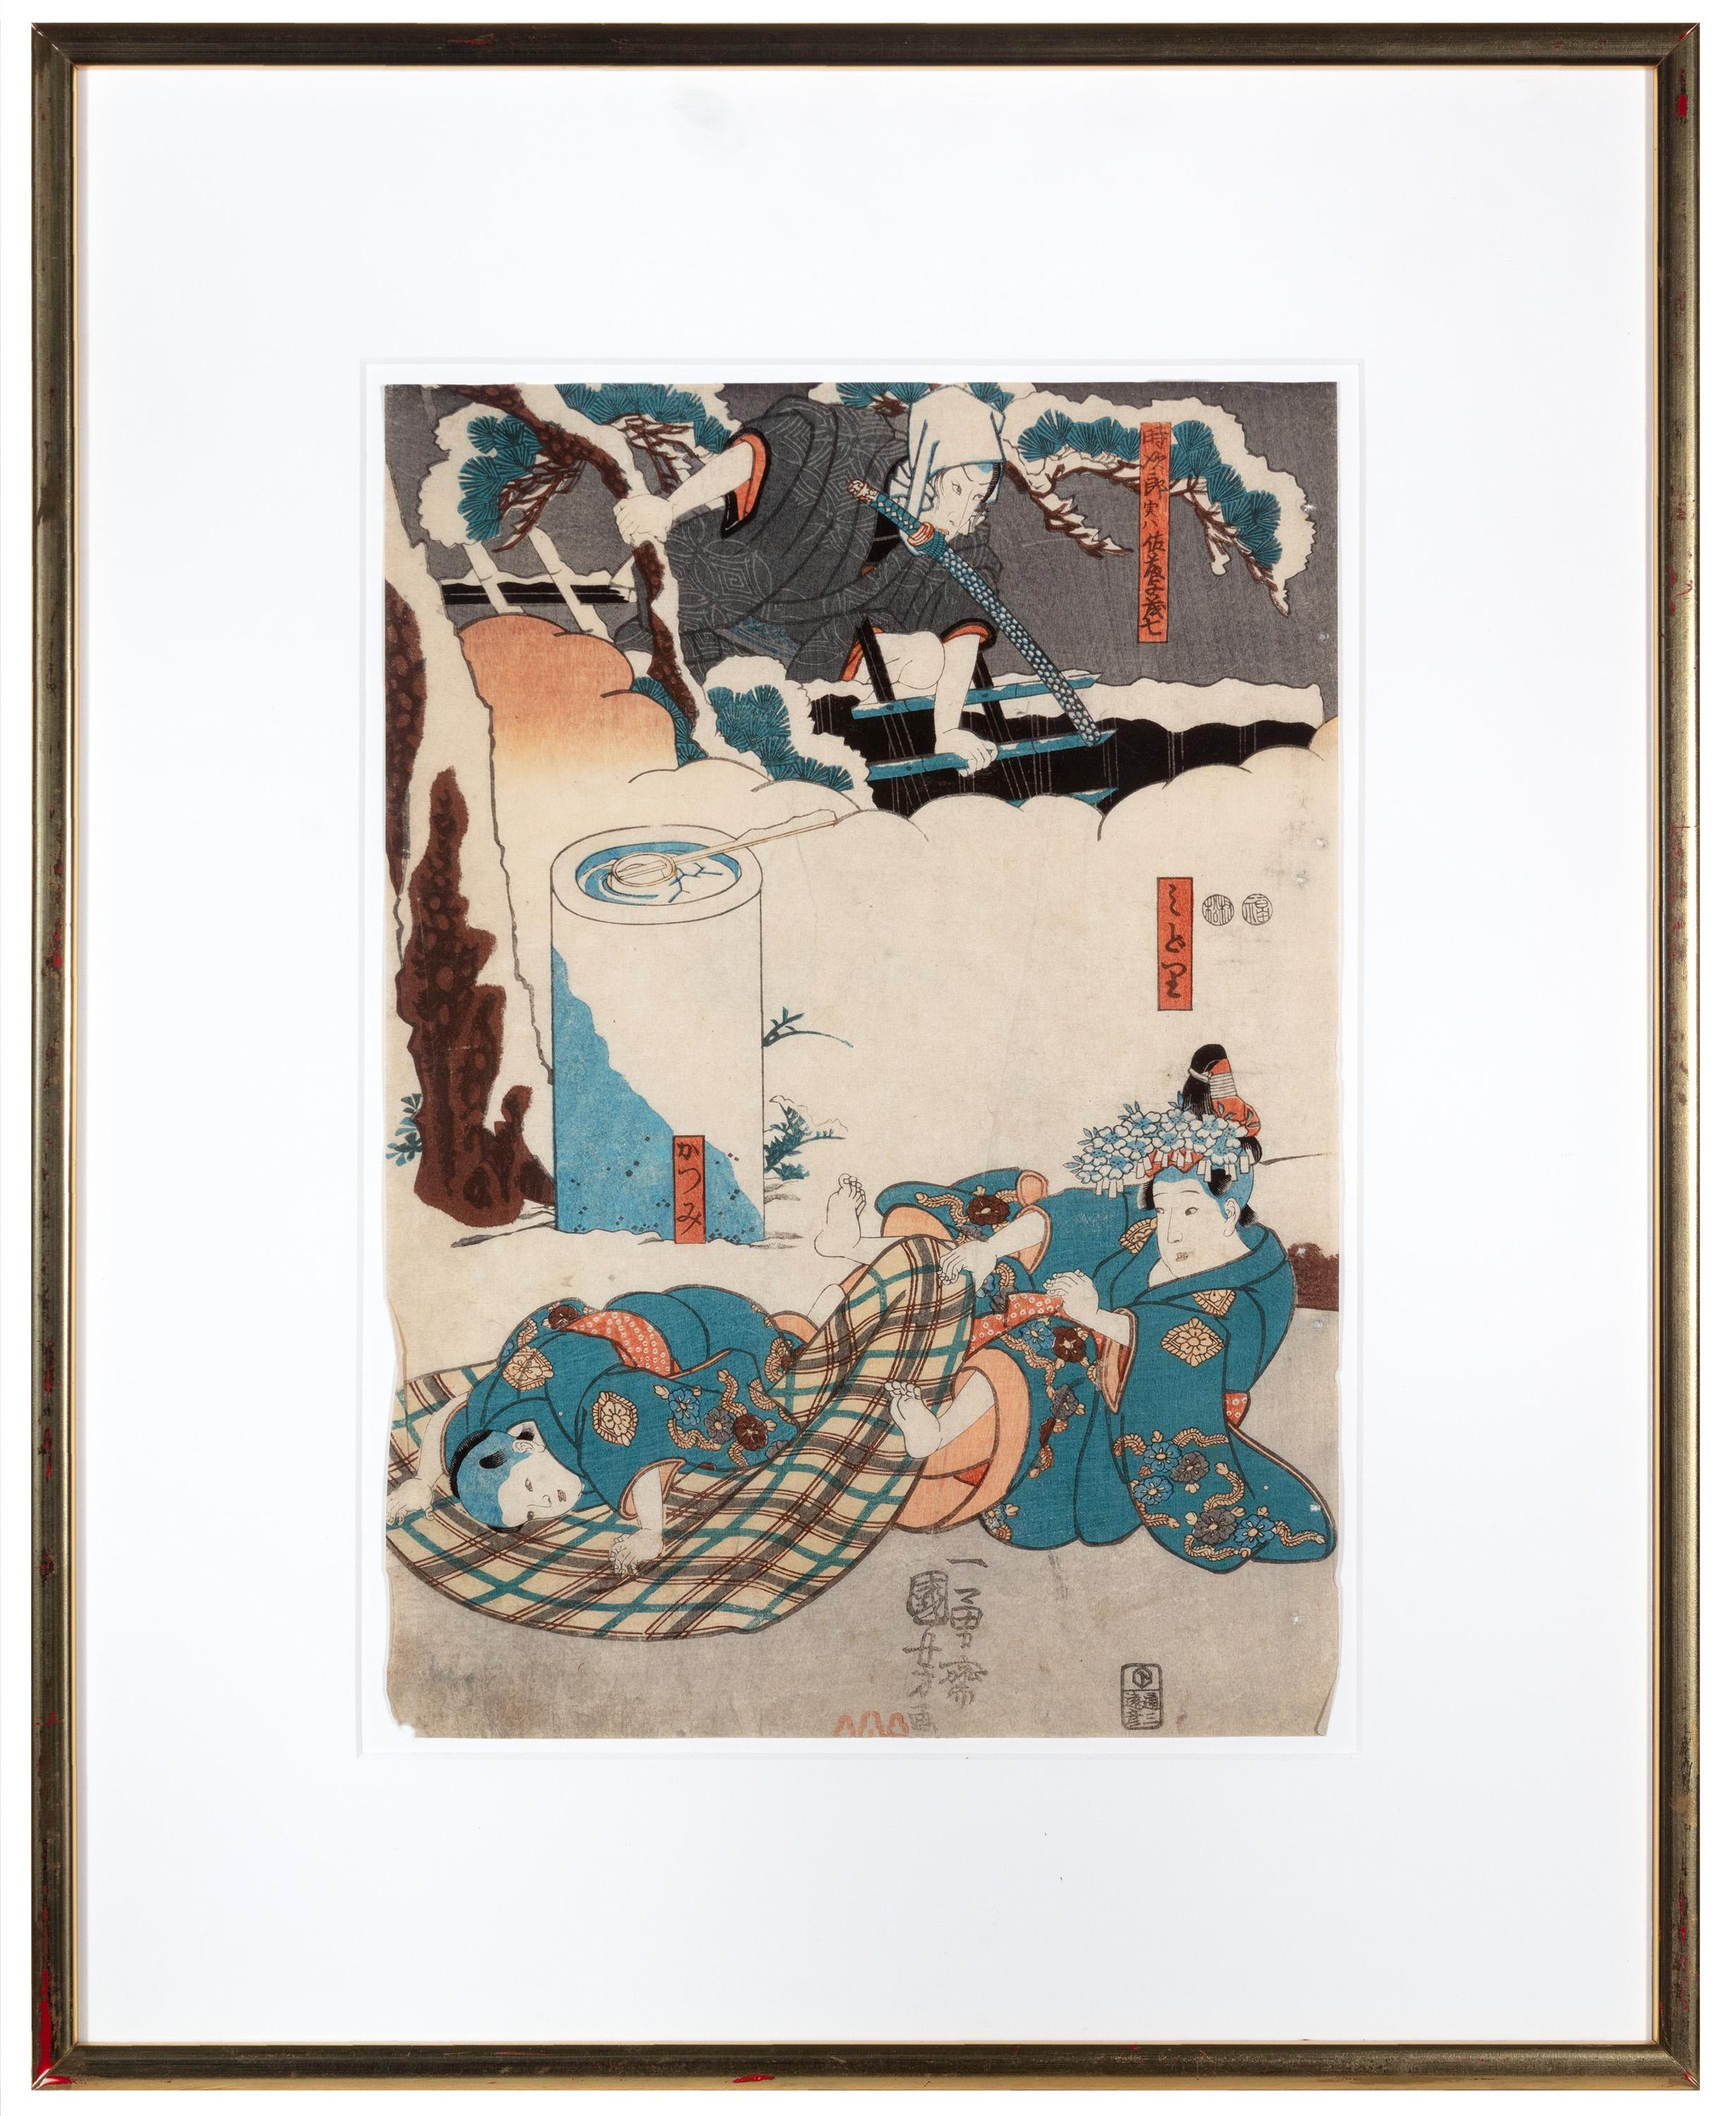 Figurative Print Kuniyoshi - "Tokijiro, Midori et Katsumi, une gravure sur bois en couleur